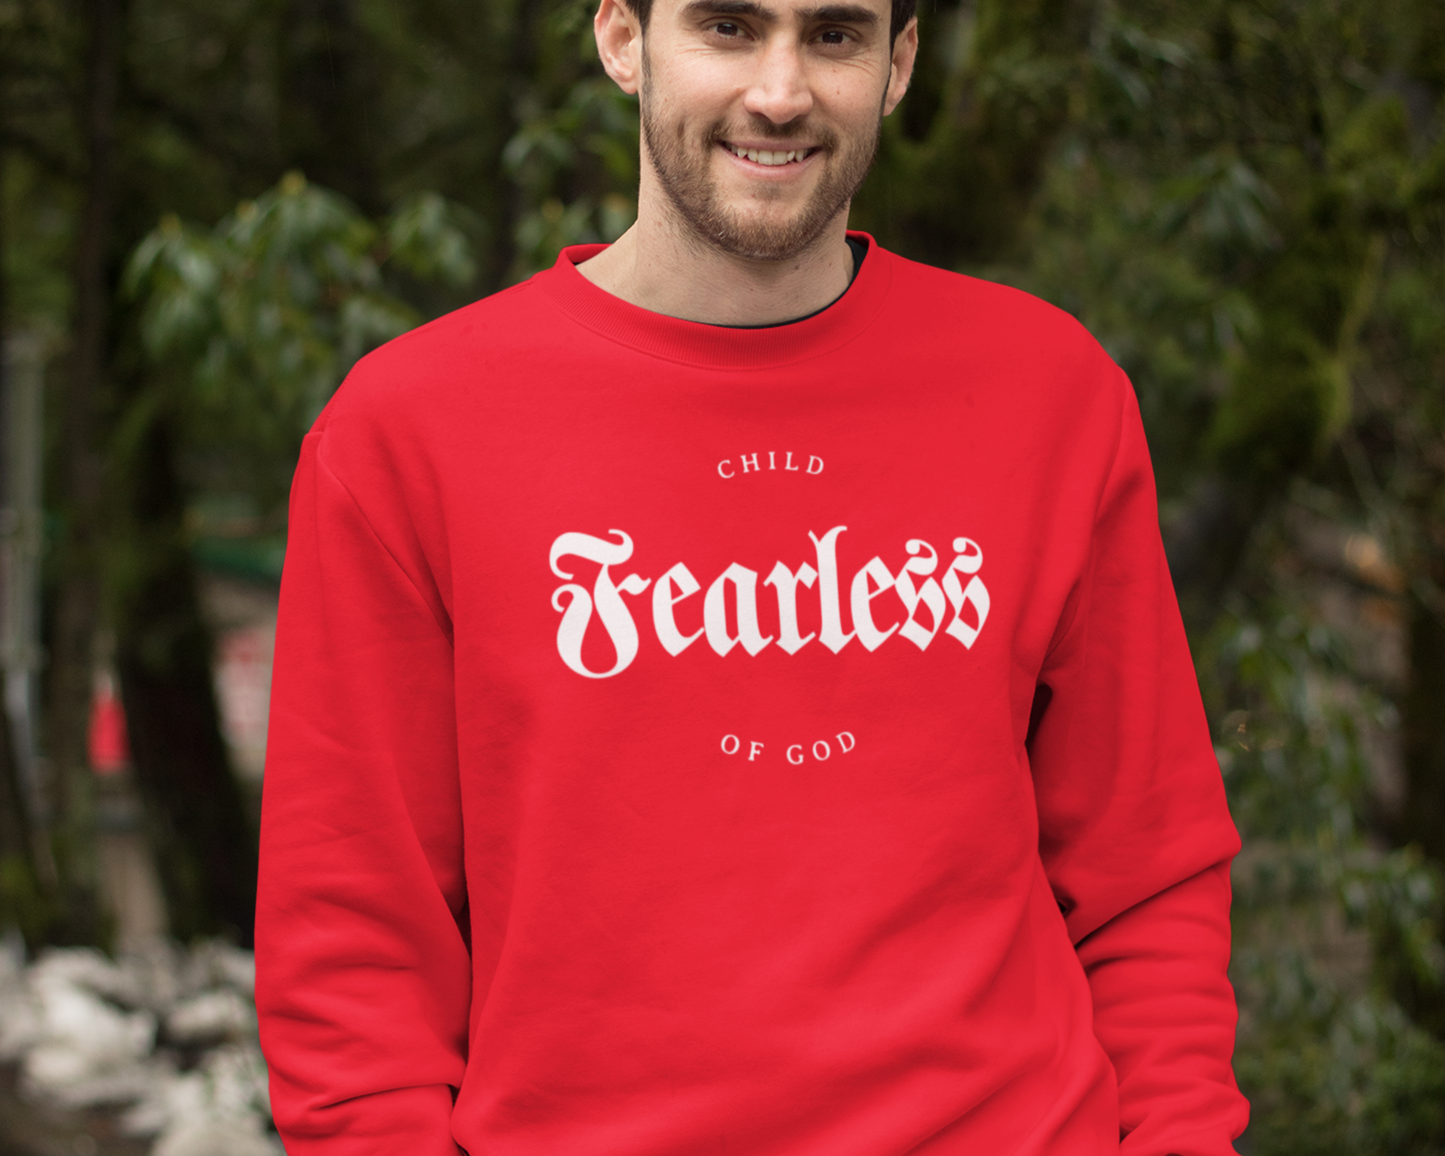 Fearless child of God Mens Sweatshirt